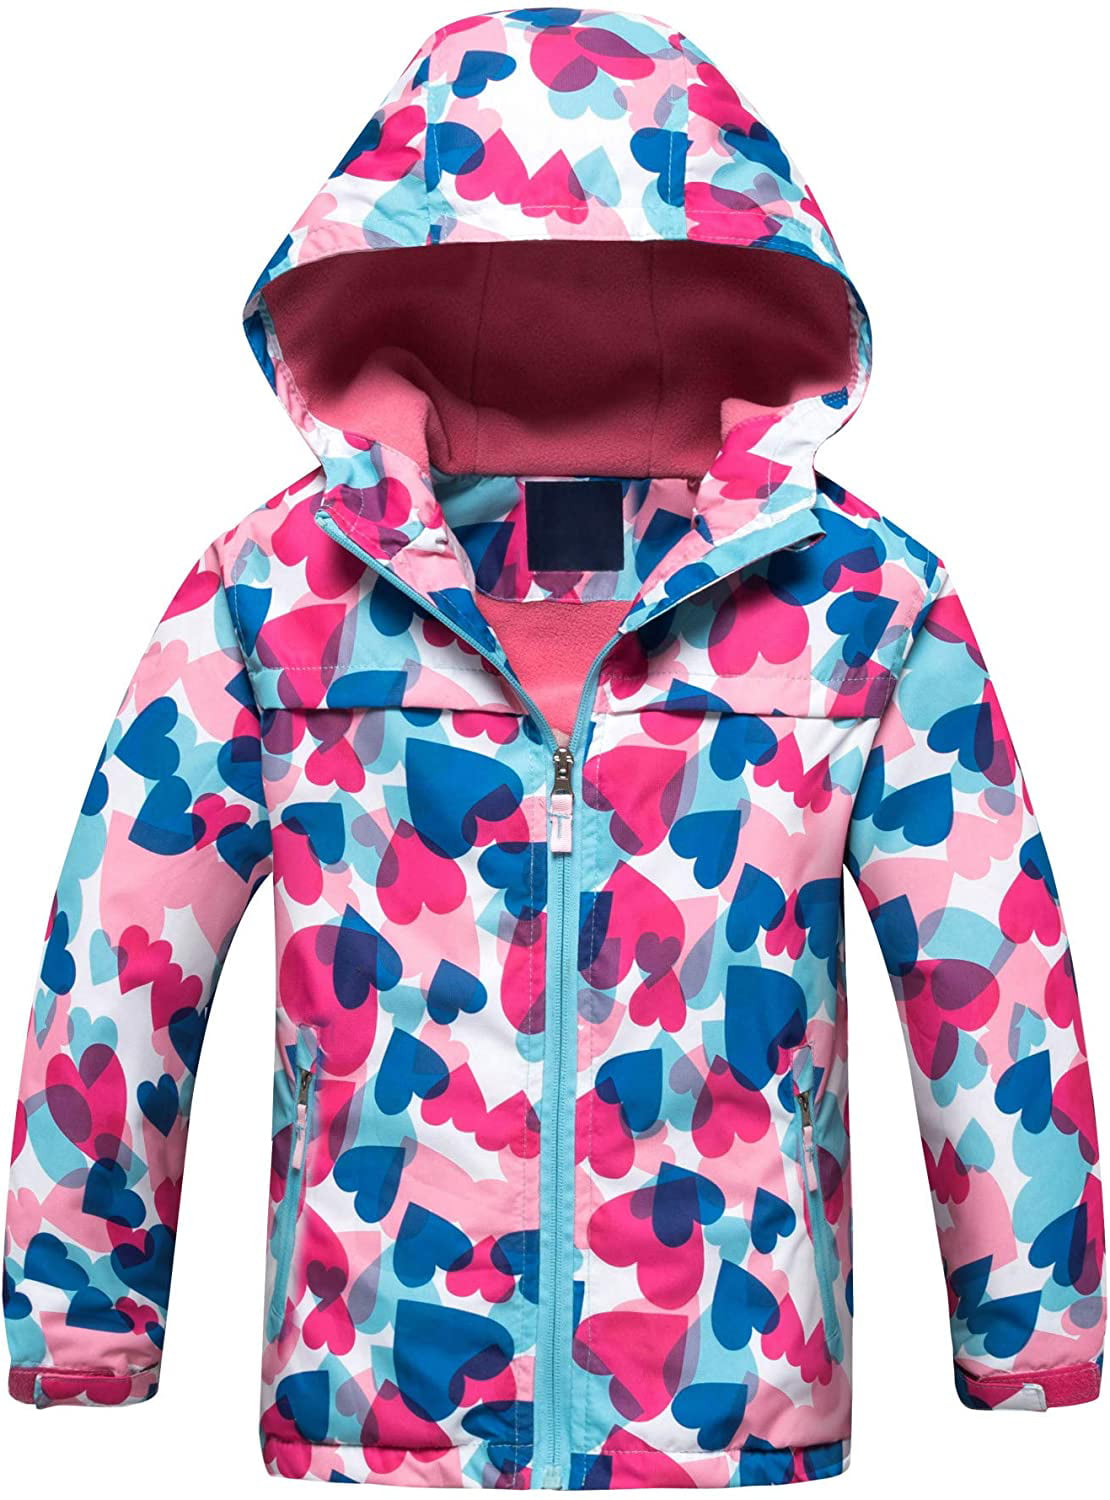 Kids Boy Girl Waterproof Fleece Jacket Coat Warm Outdoor Sport Windproof Windbreaker